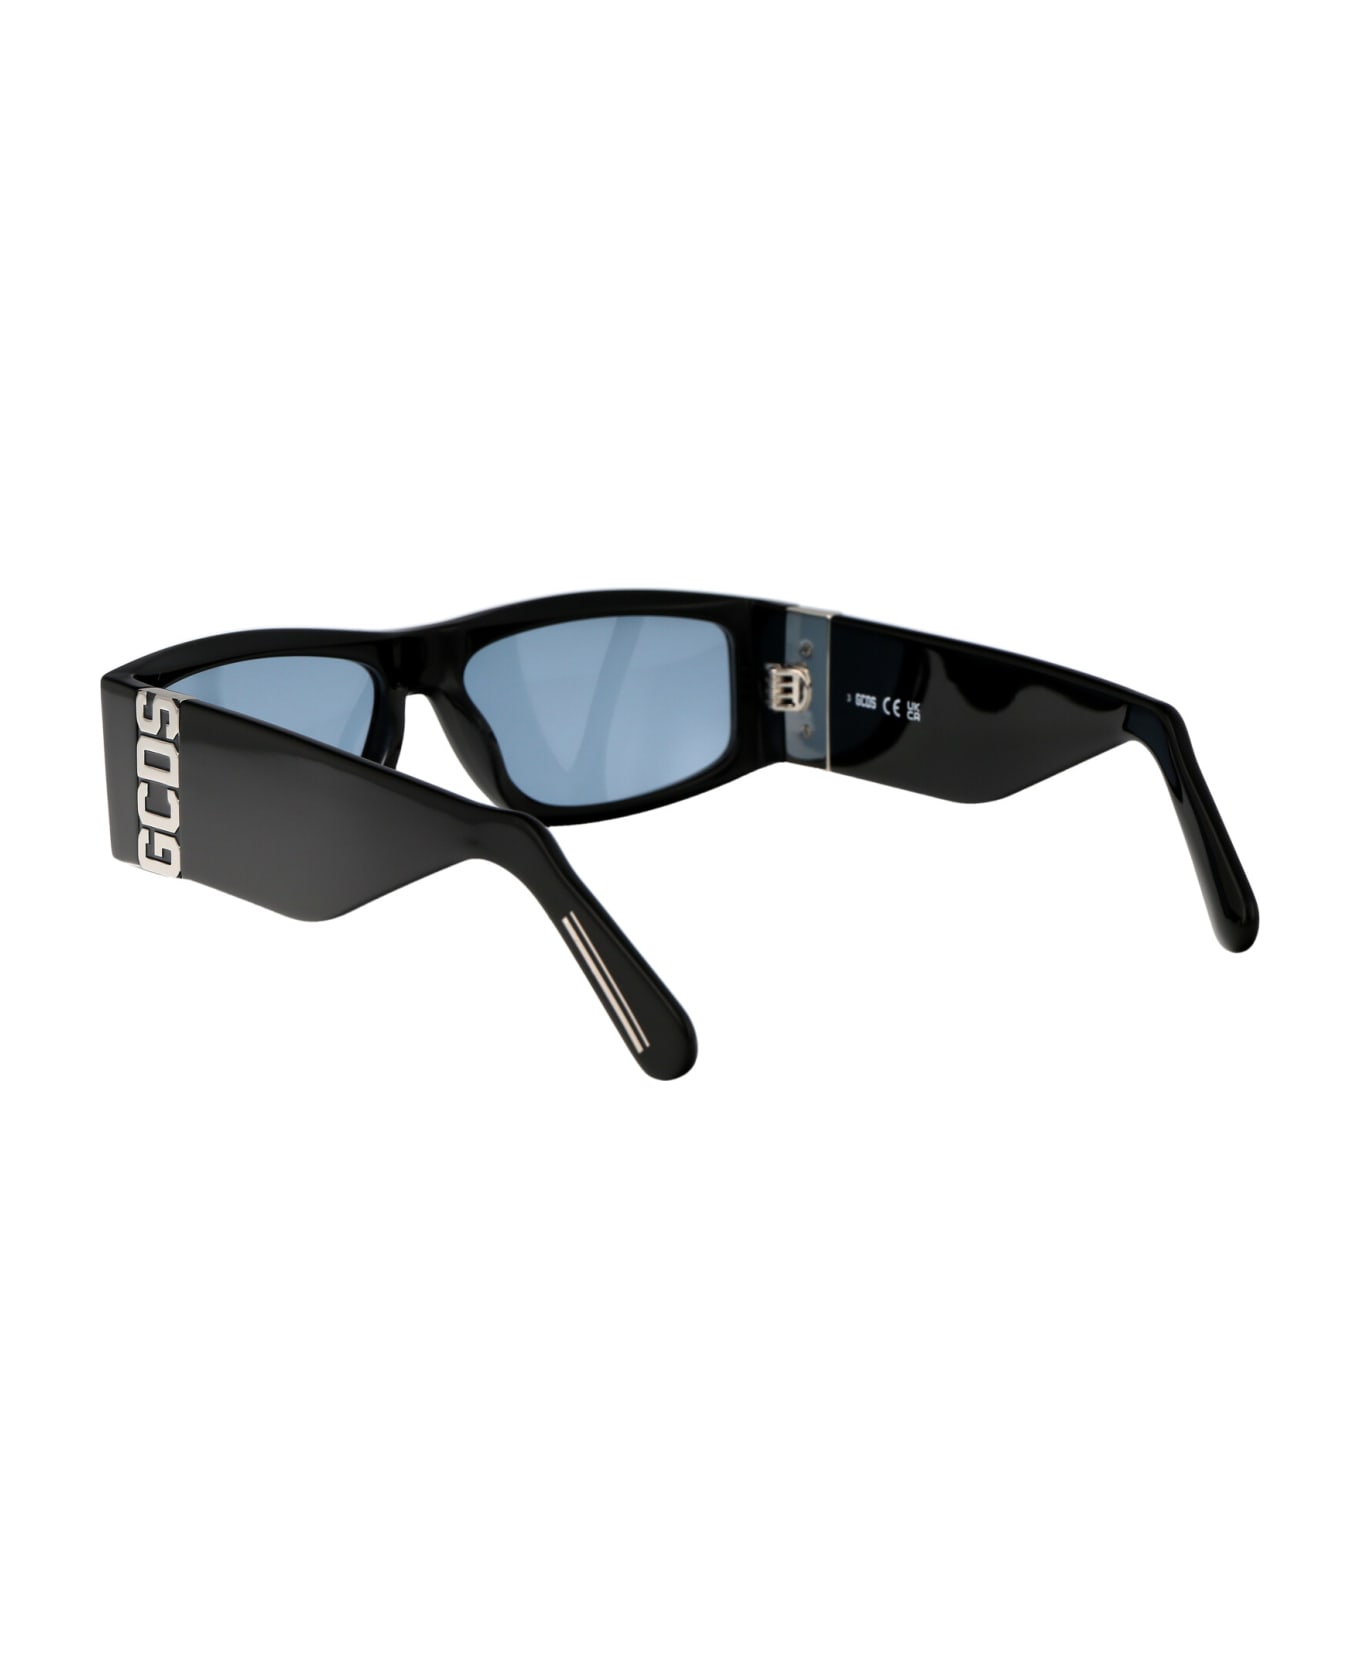 GCDS Gd0037 Sunglasses - 01V Nero Lucido/Blu サングラス